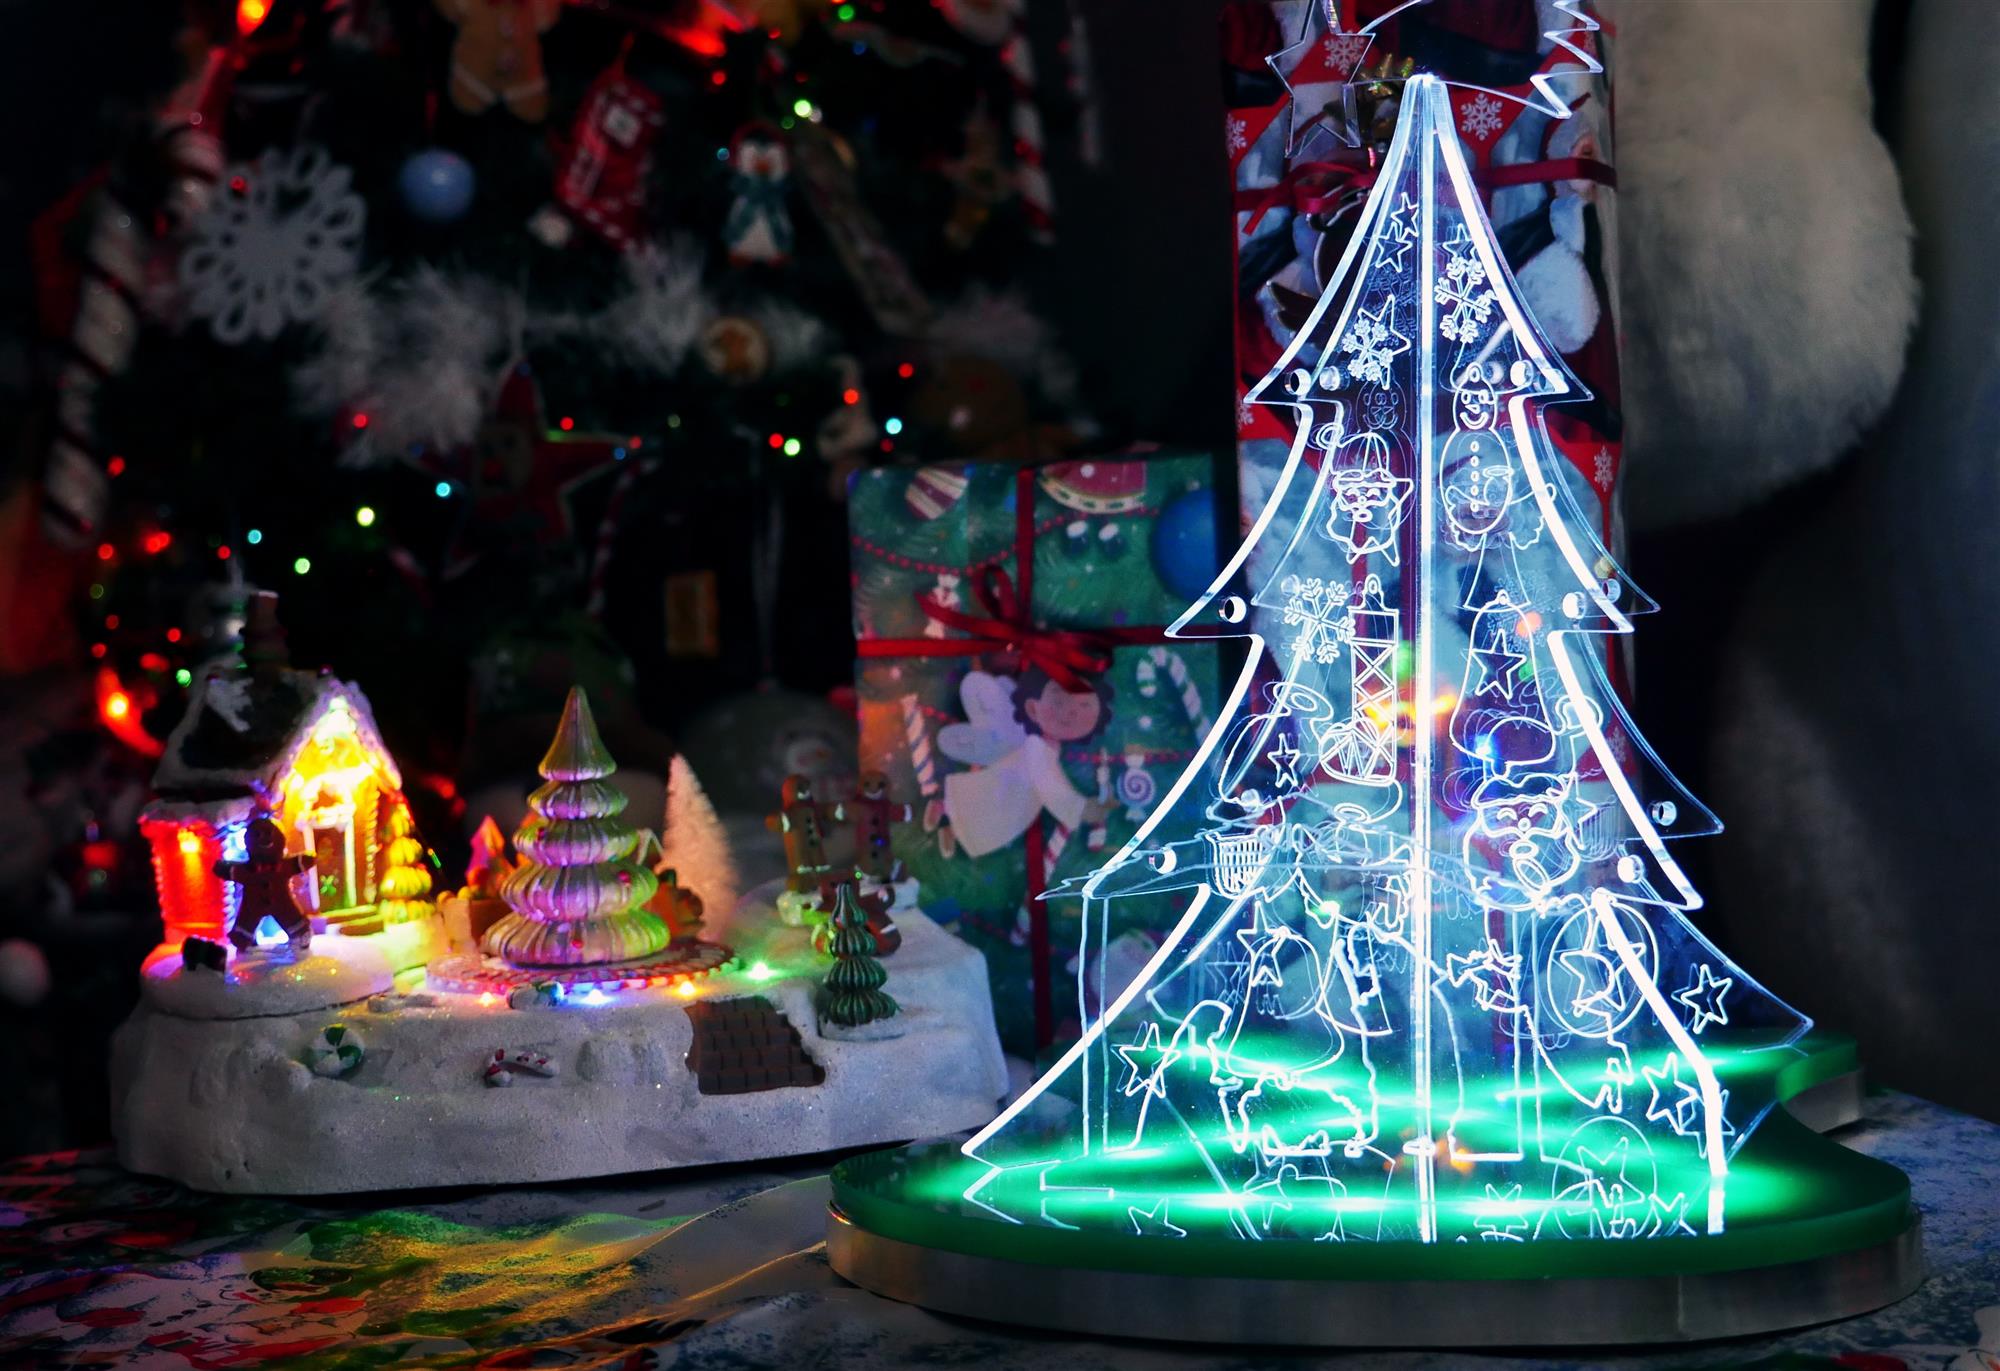 Presepe 3D con led a suon di musica| Christmas